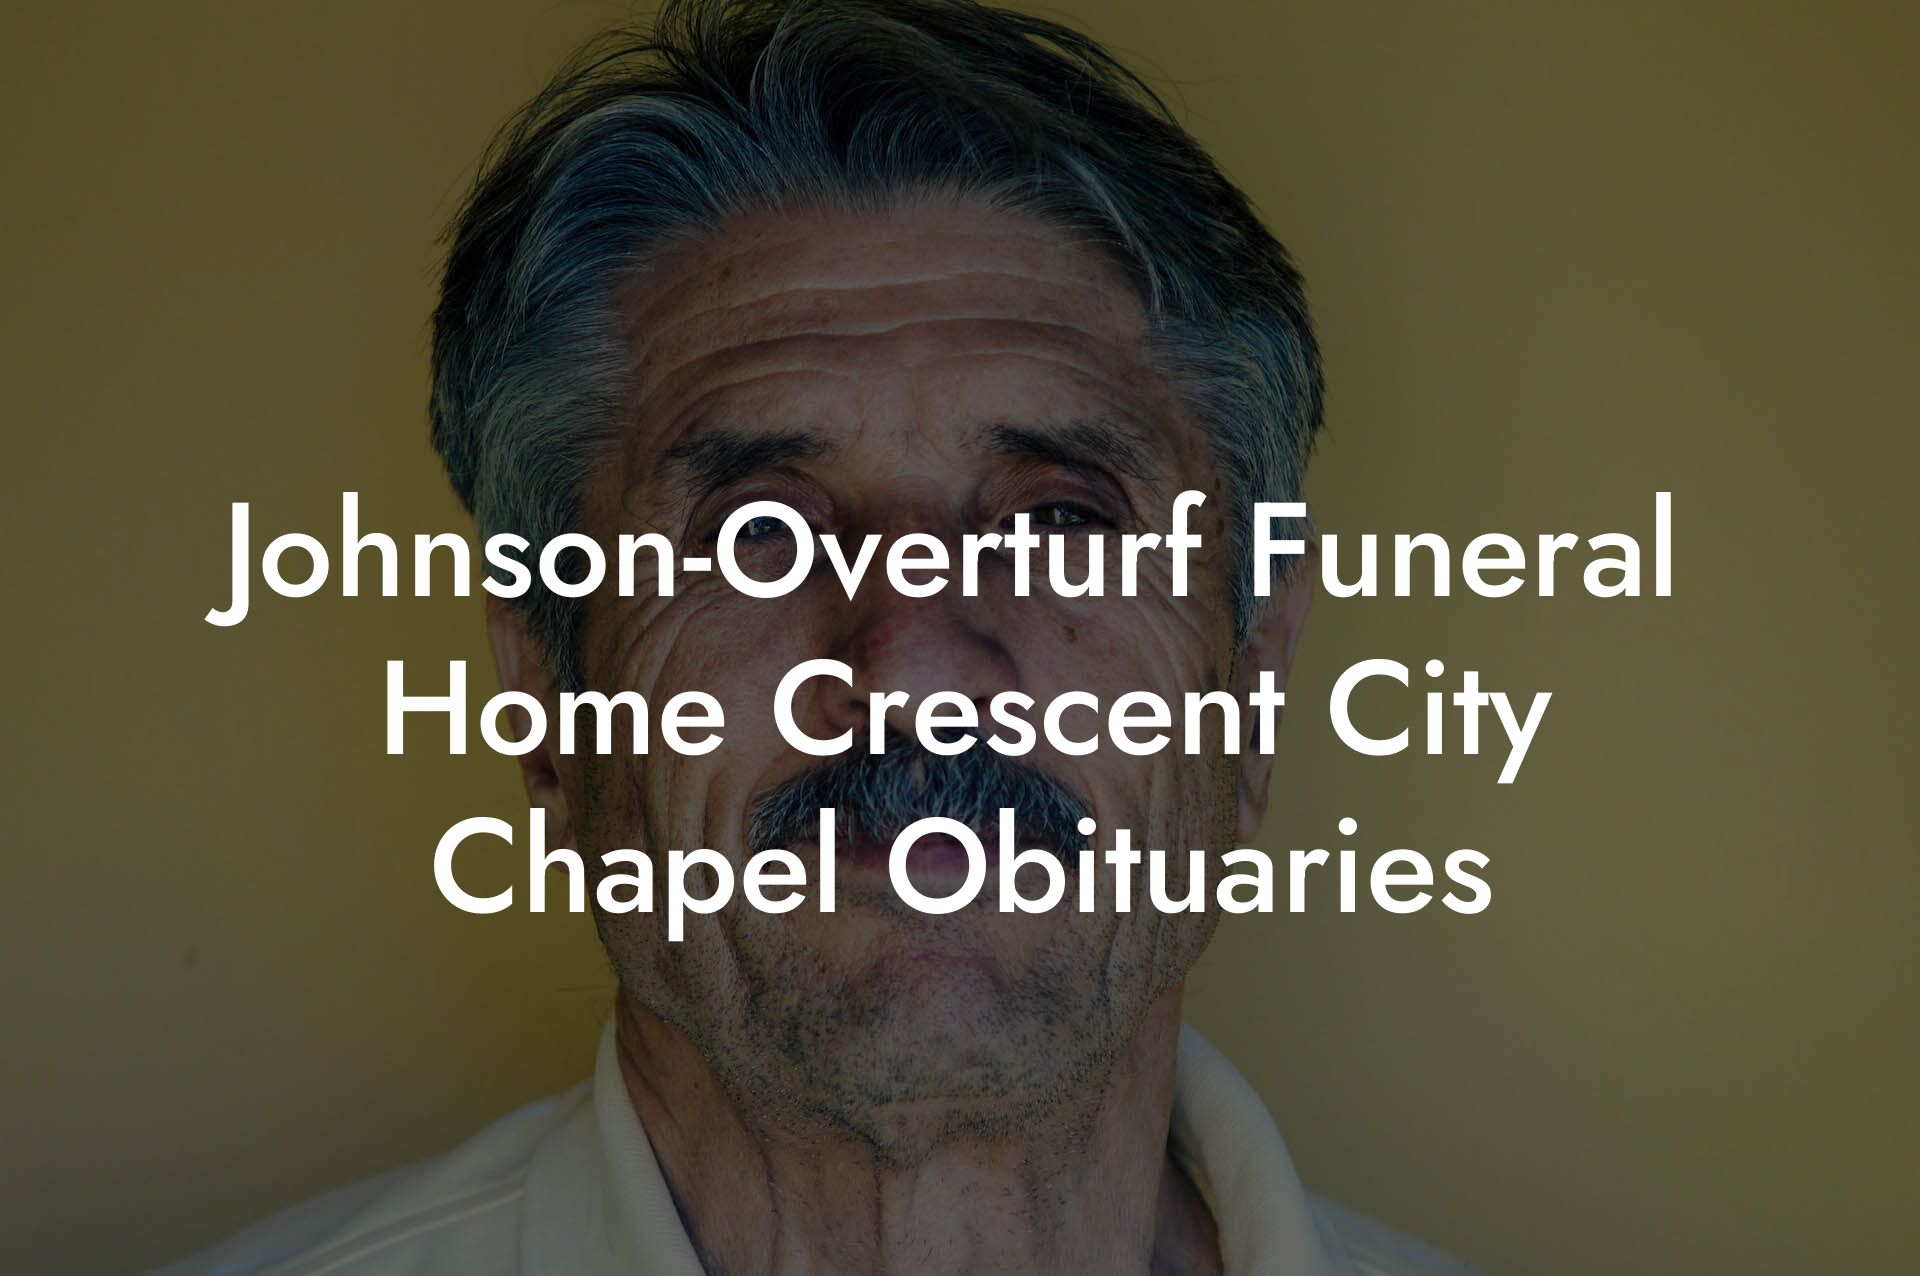 Johnson-Overturf Funeral Home Crescent City Chapel Obituaries